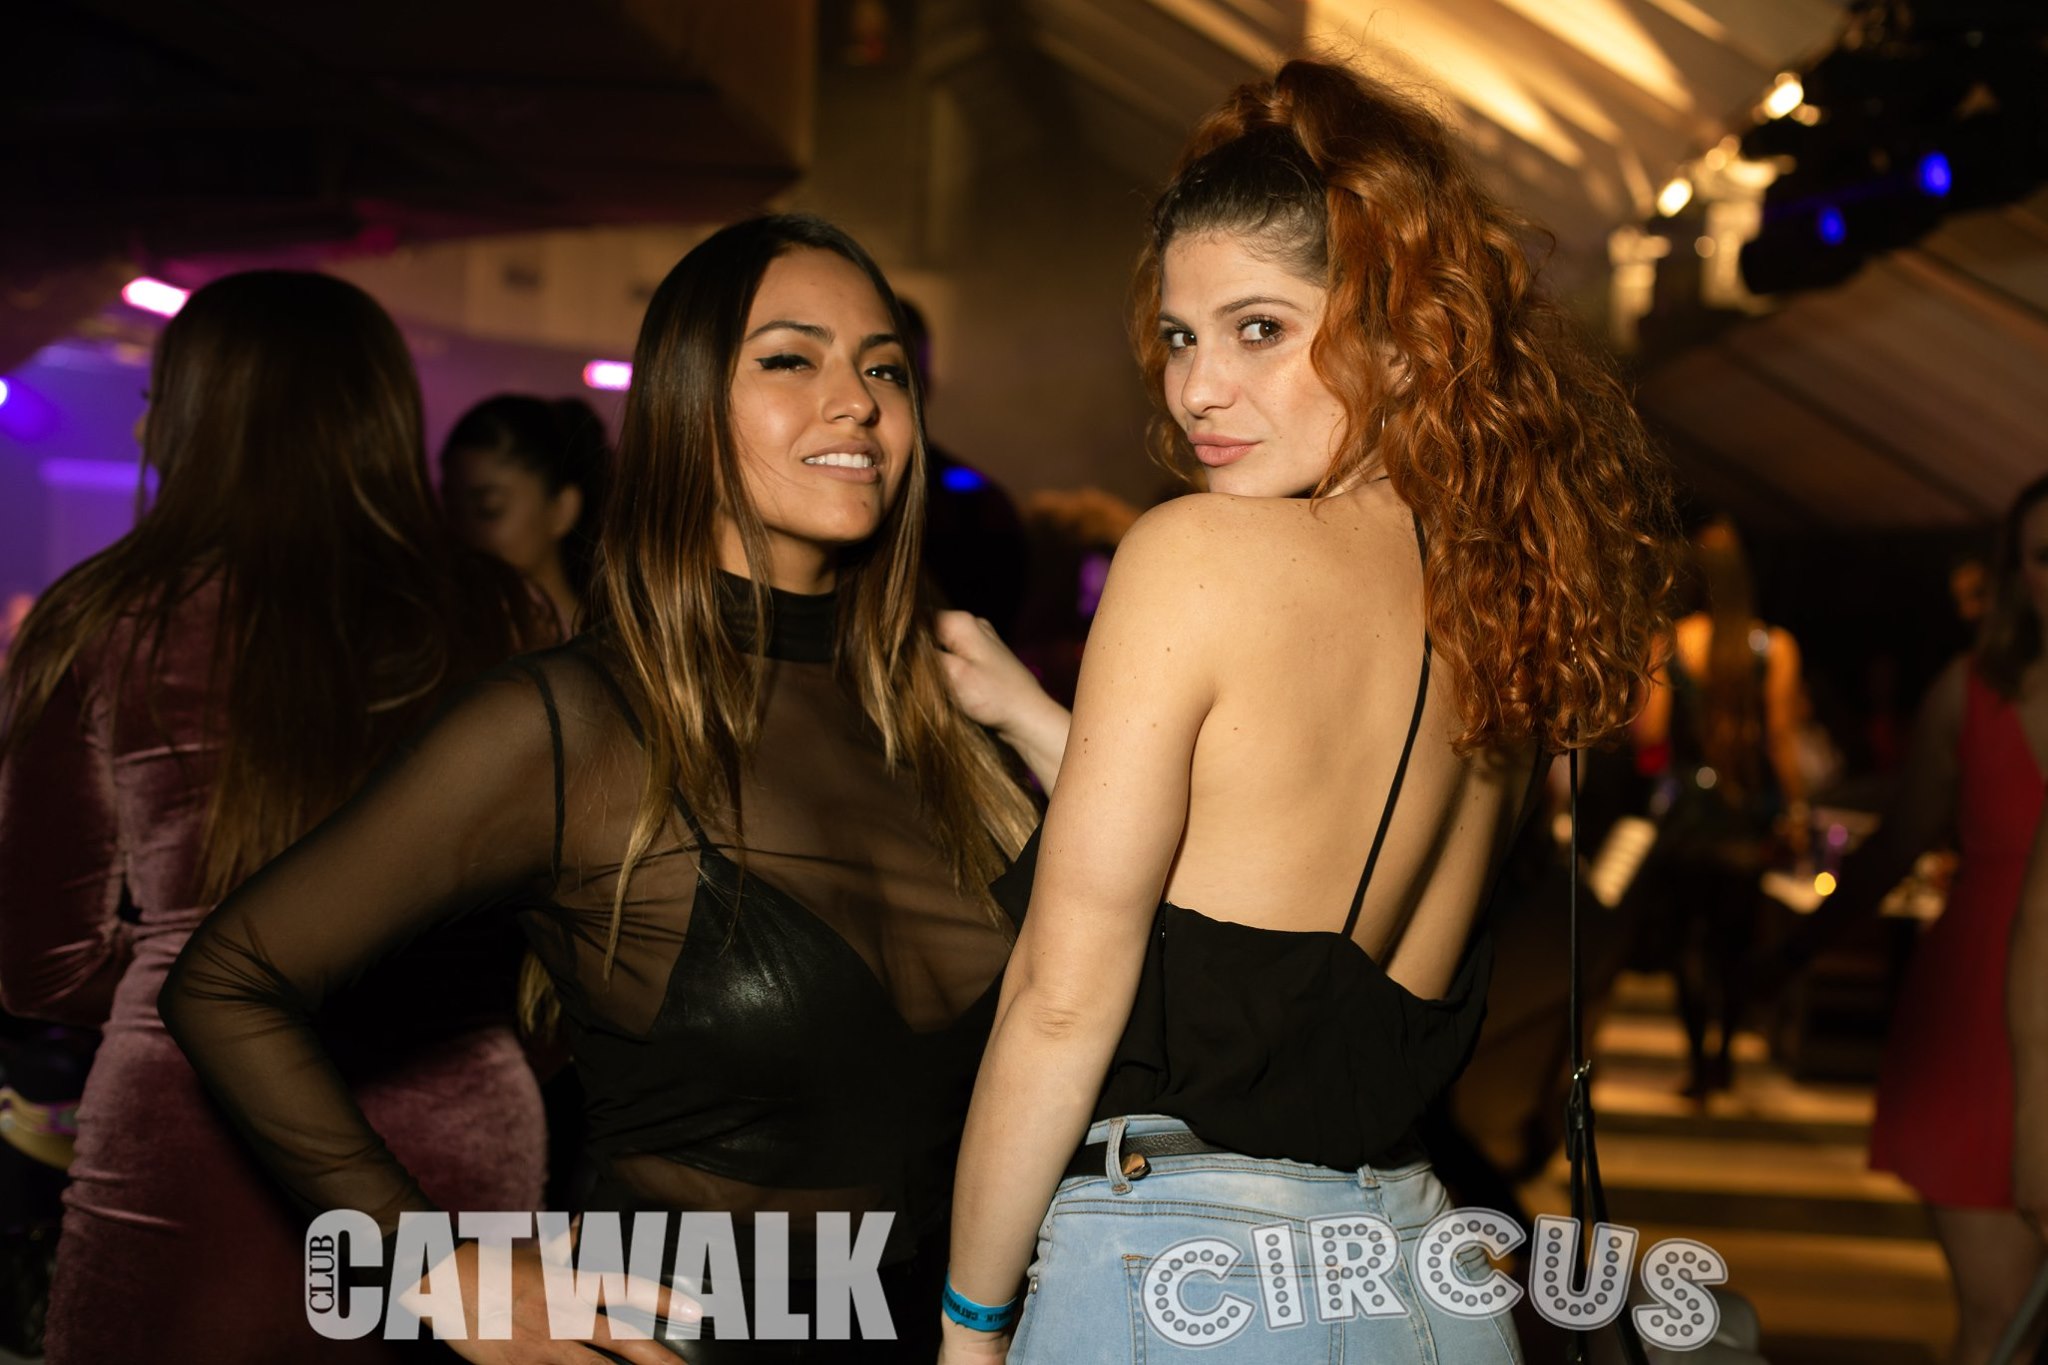 Catwalk Barcelona Chicas